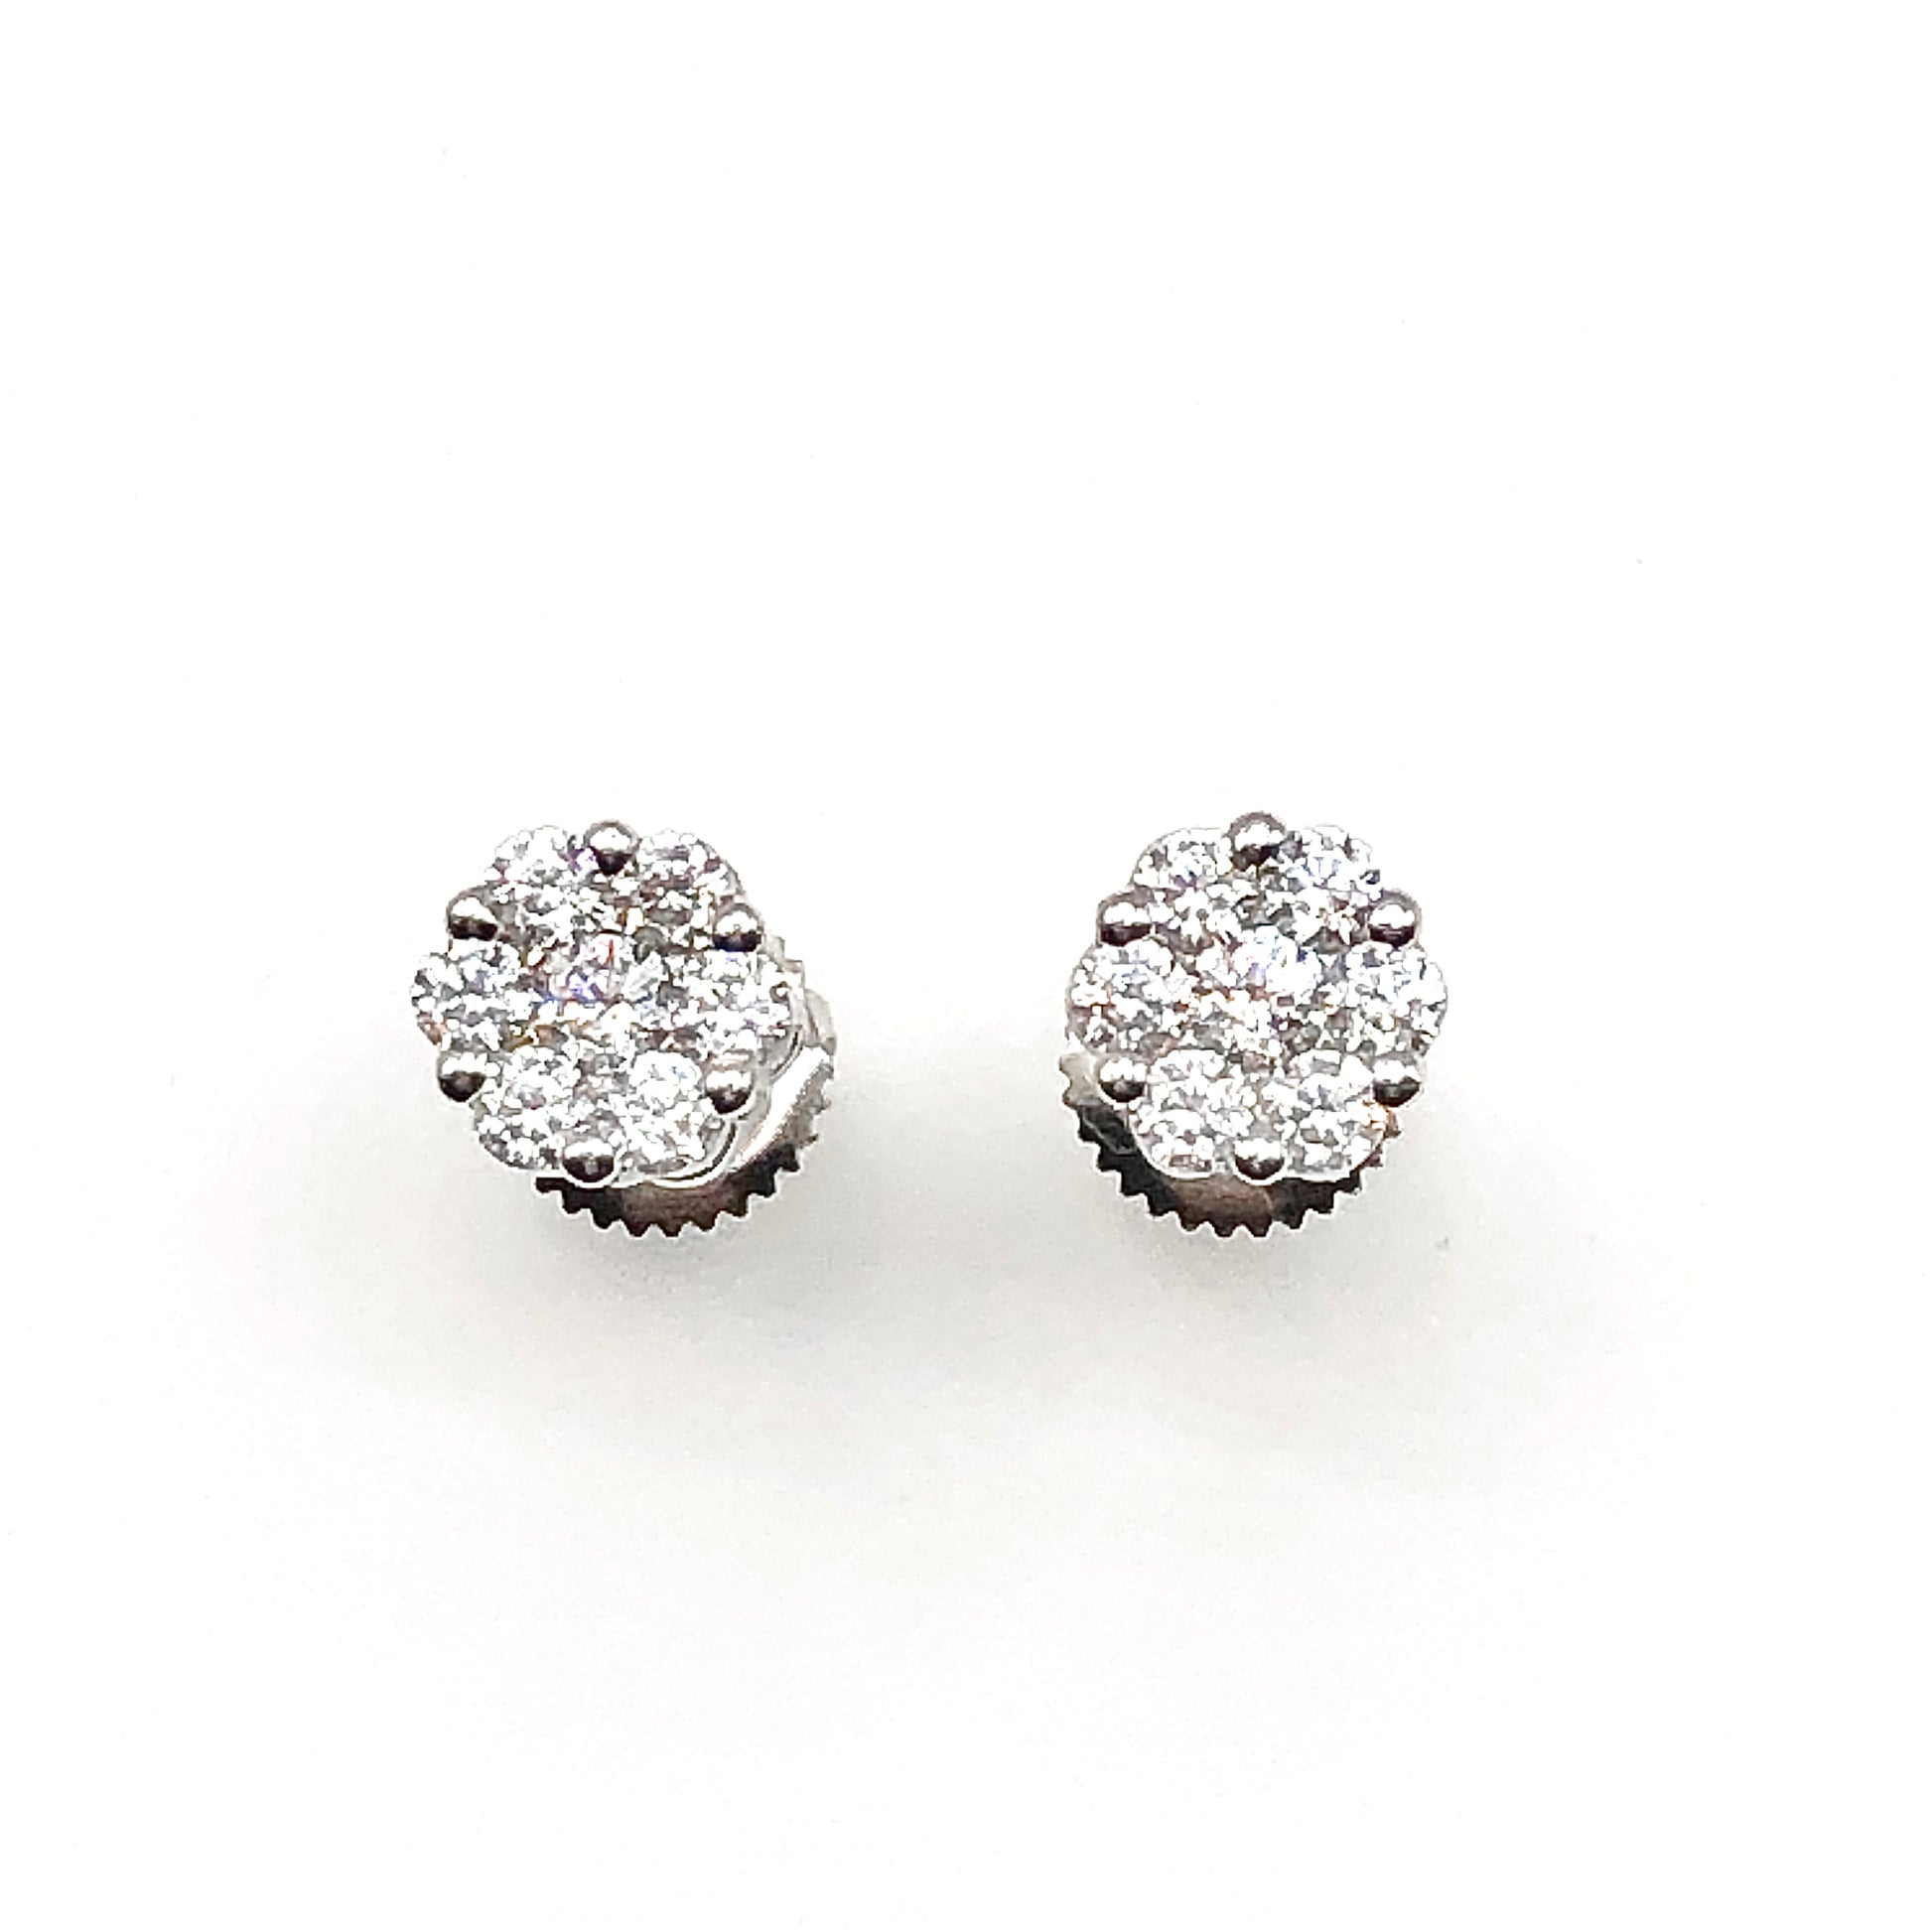 Earrings - Sterling Silver Sparkly Cluster Stud Earrings